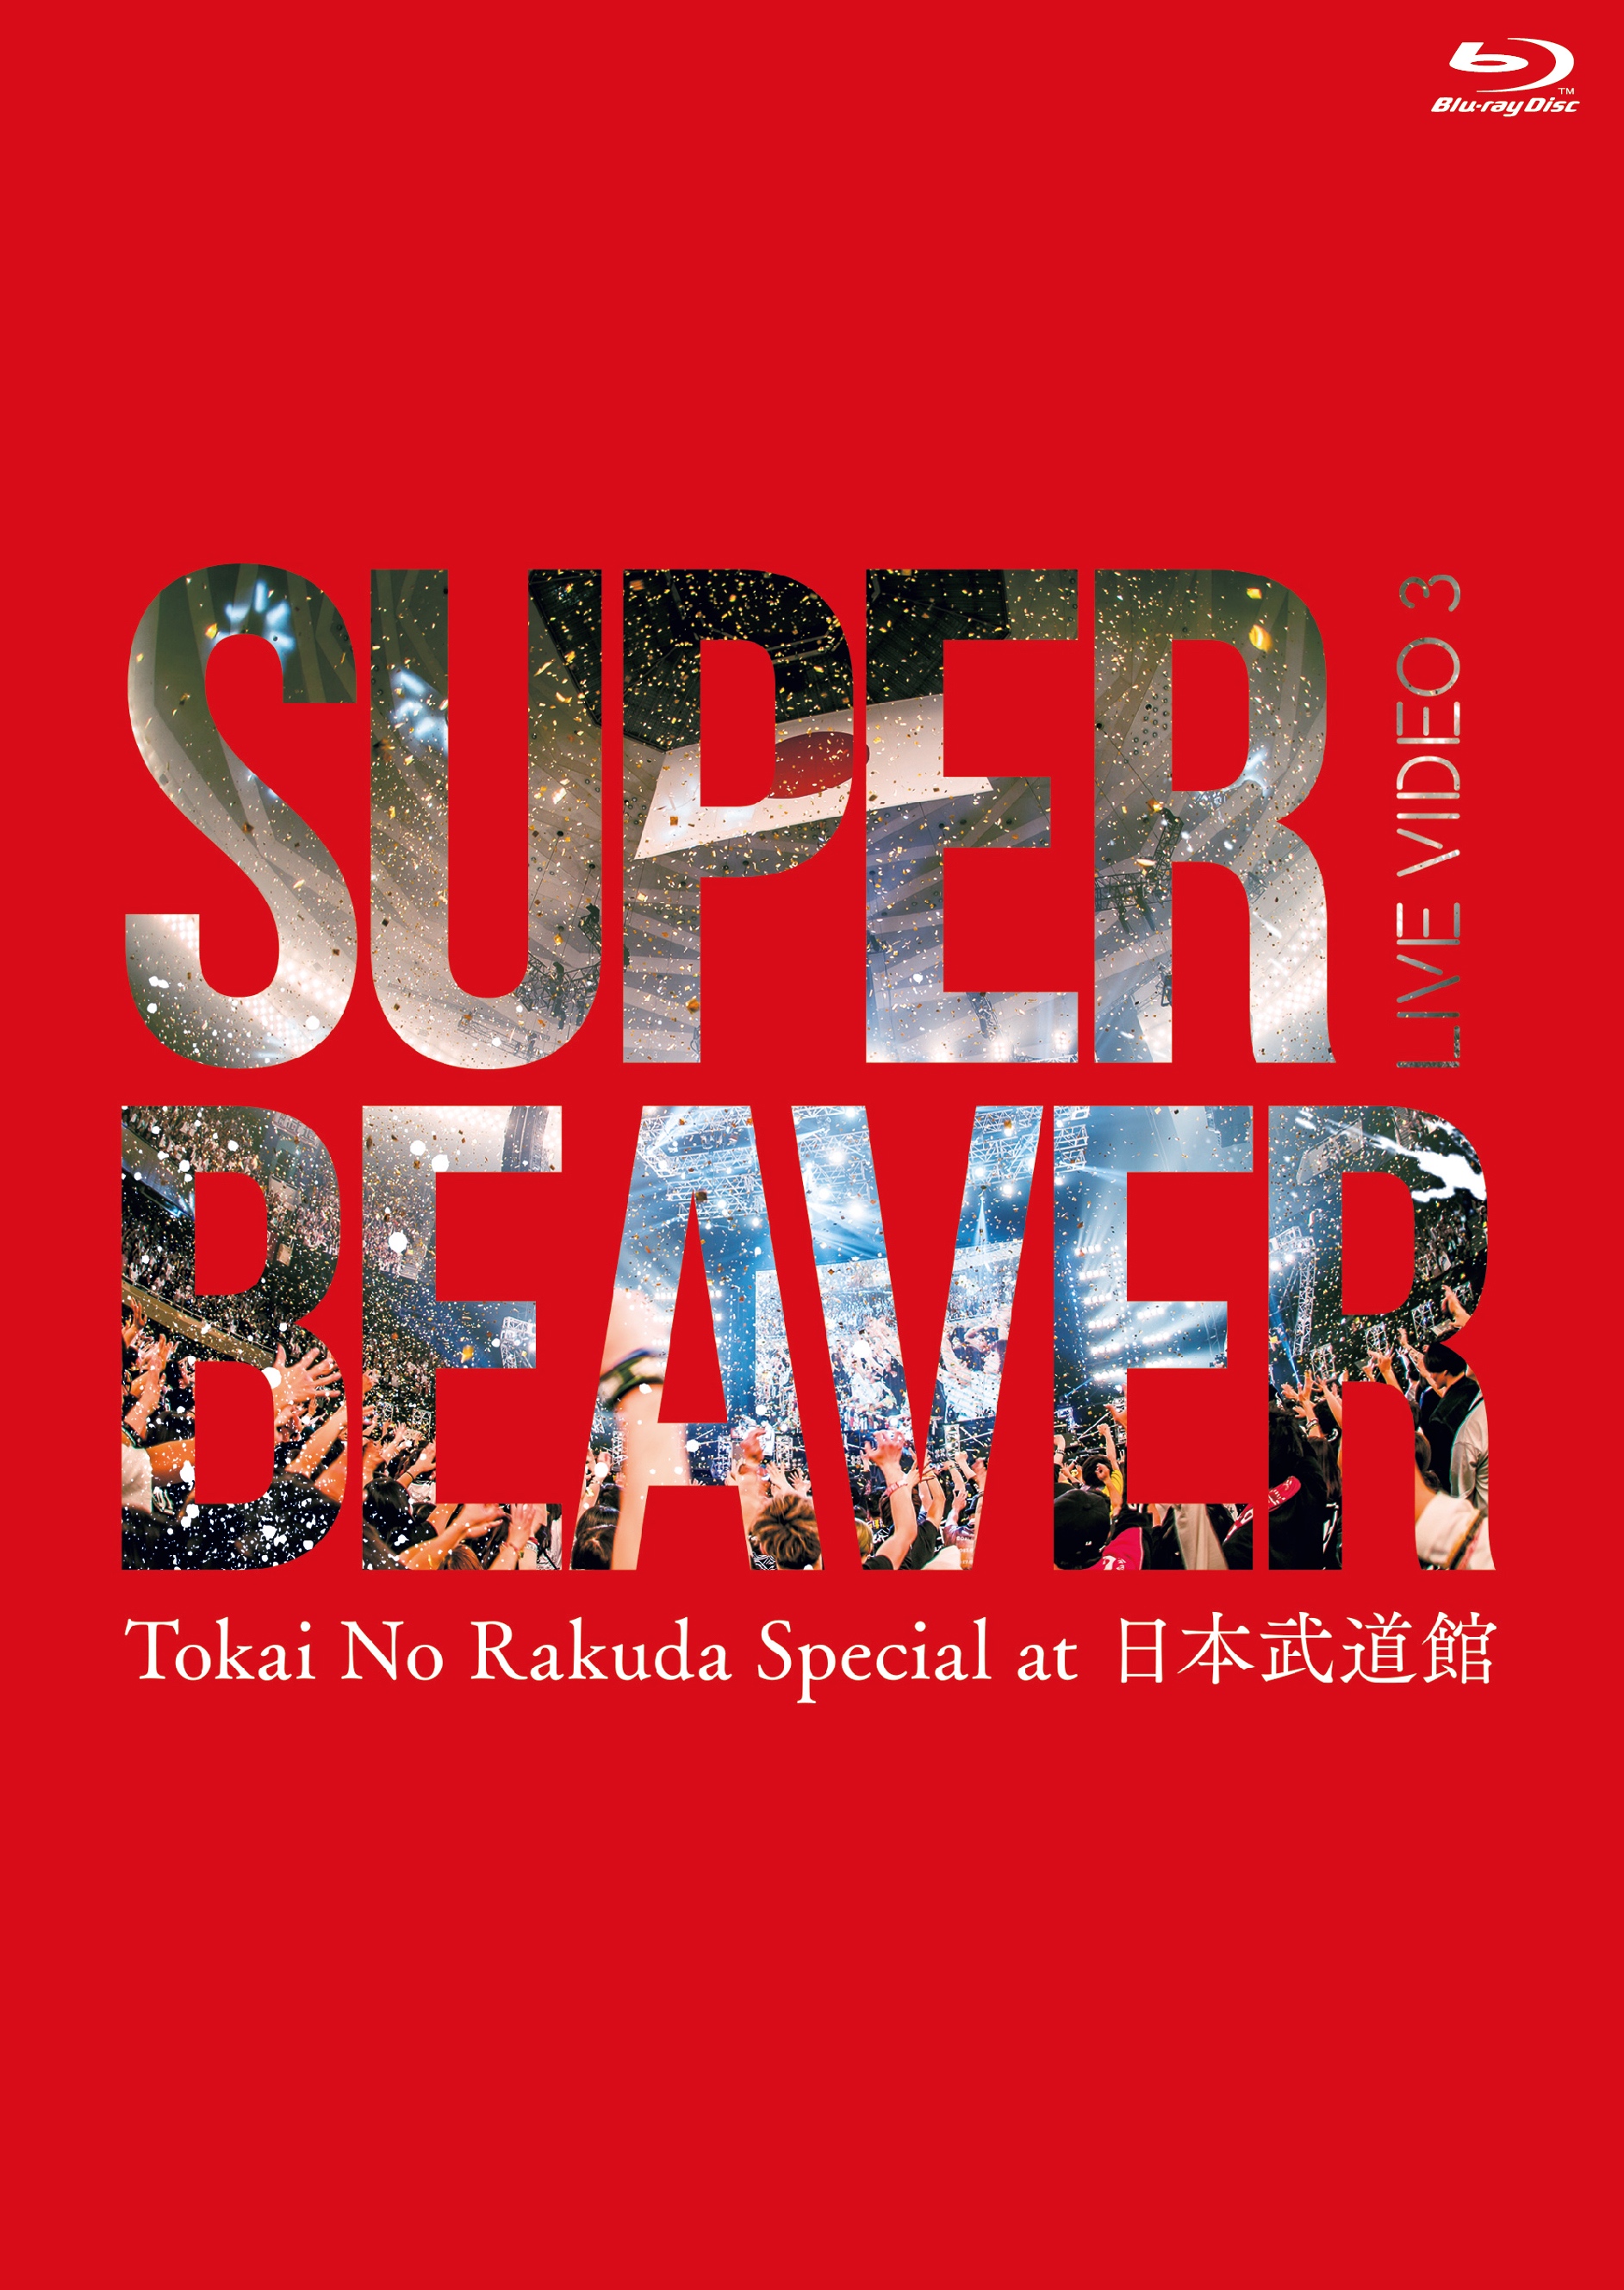 DVD & Blu-ray 「LIVE VIDEO 3 Tokai No Rakuda Special at 日本武道館 